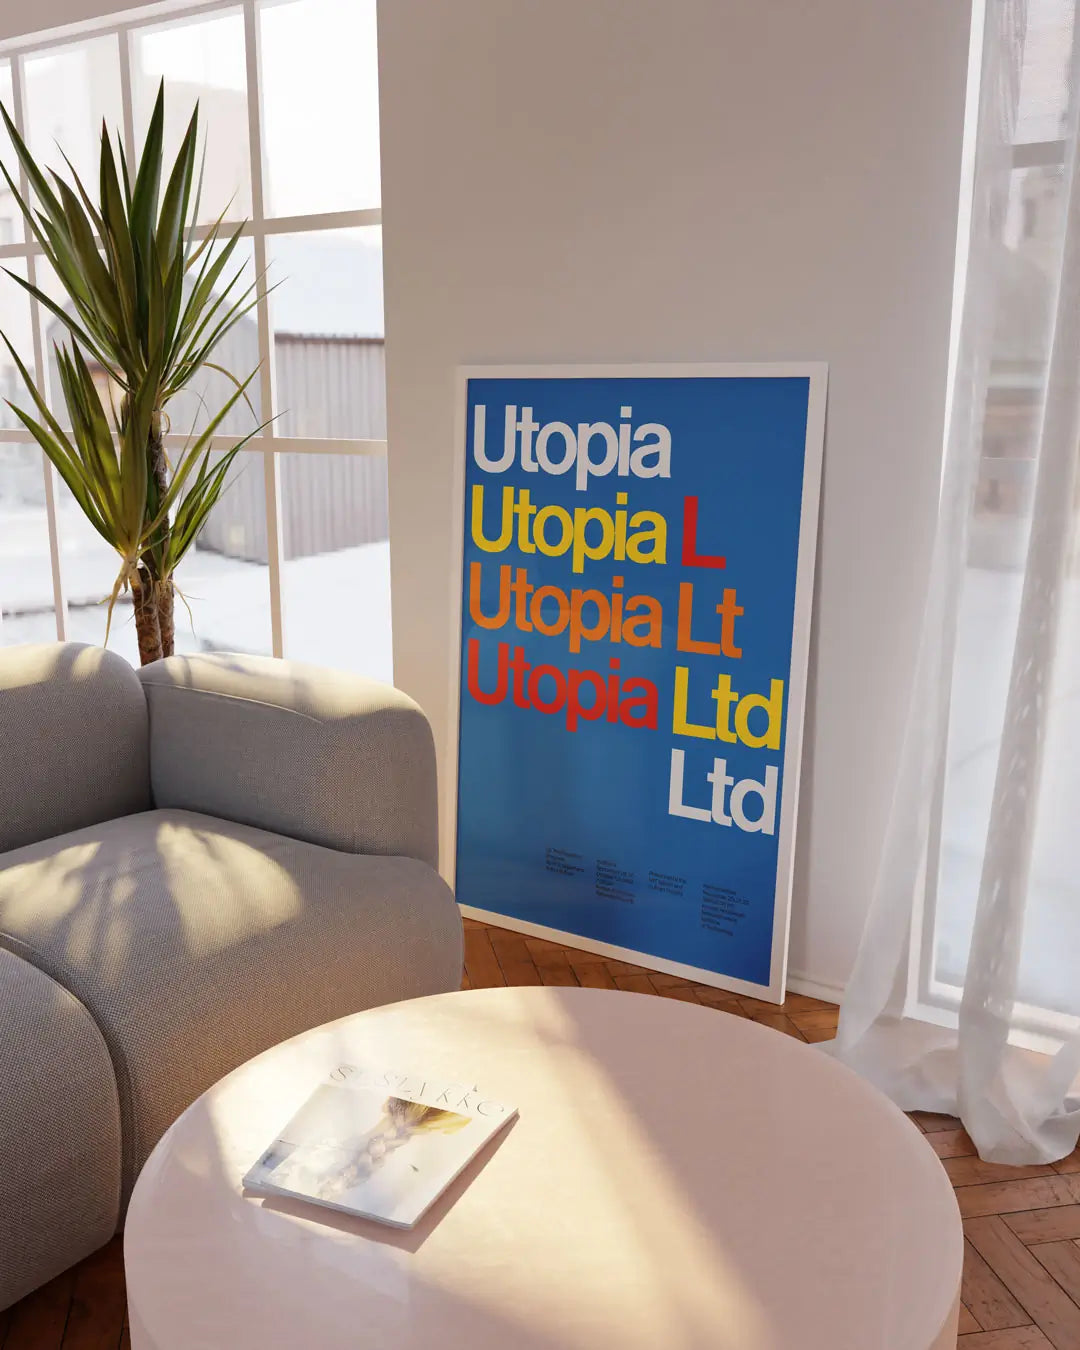 Utopia Ltd – Official Bauhaus Japan